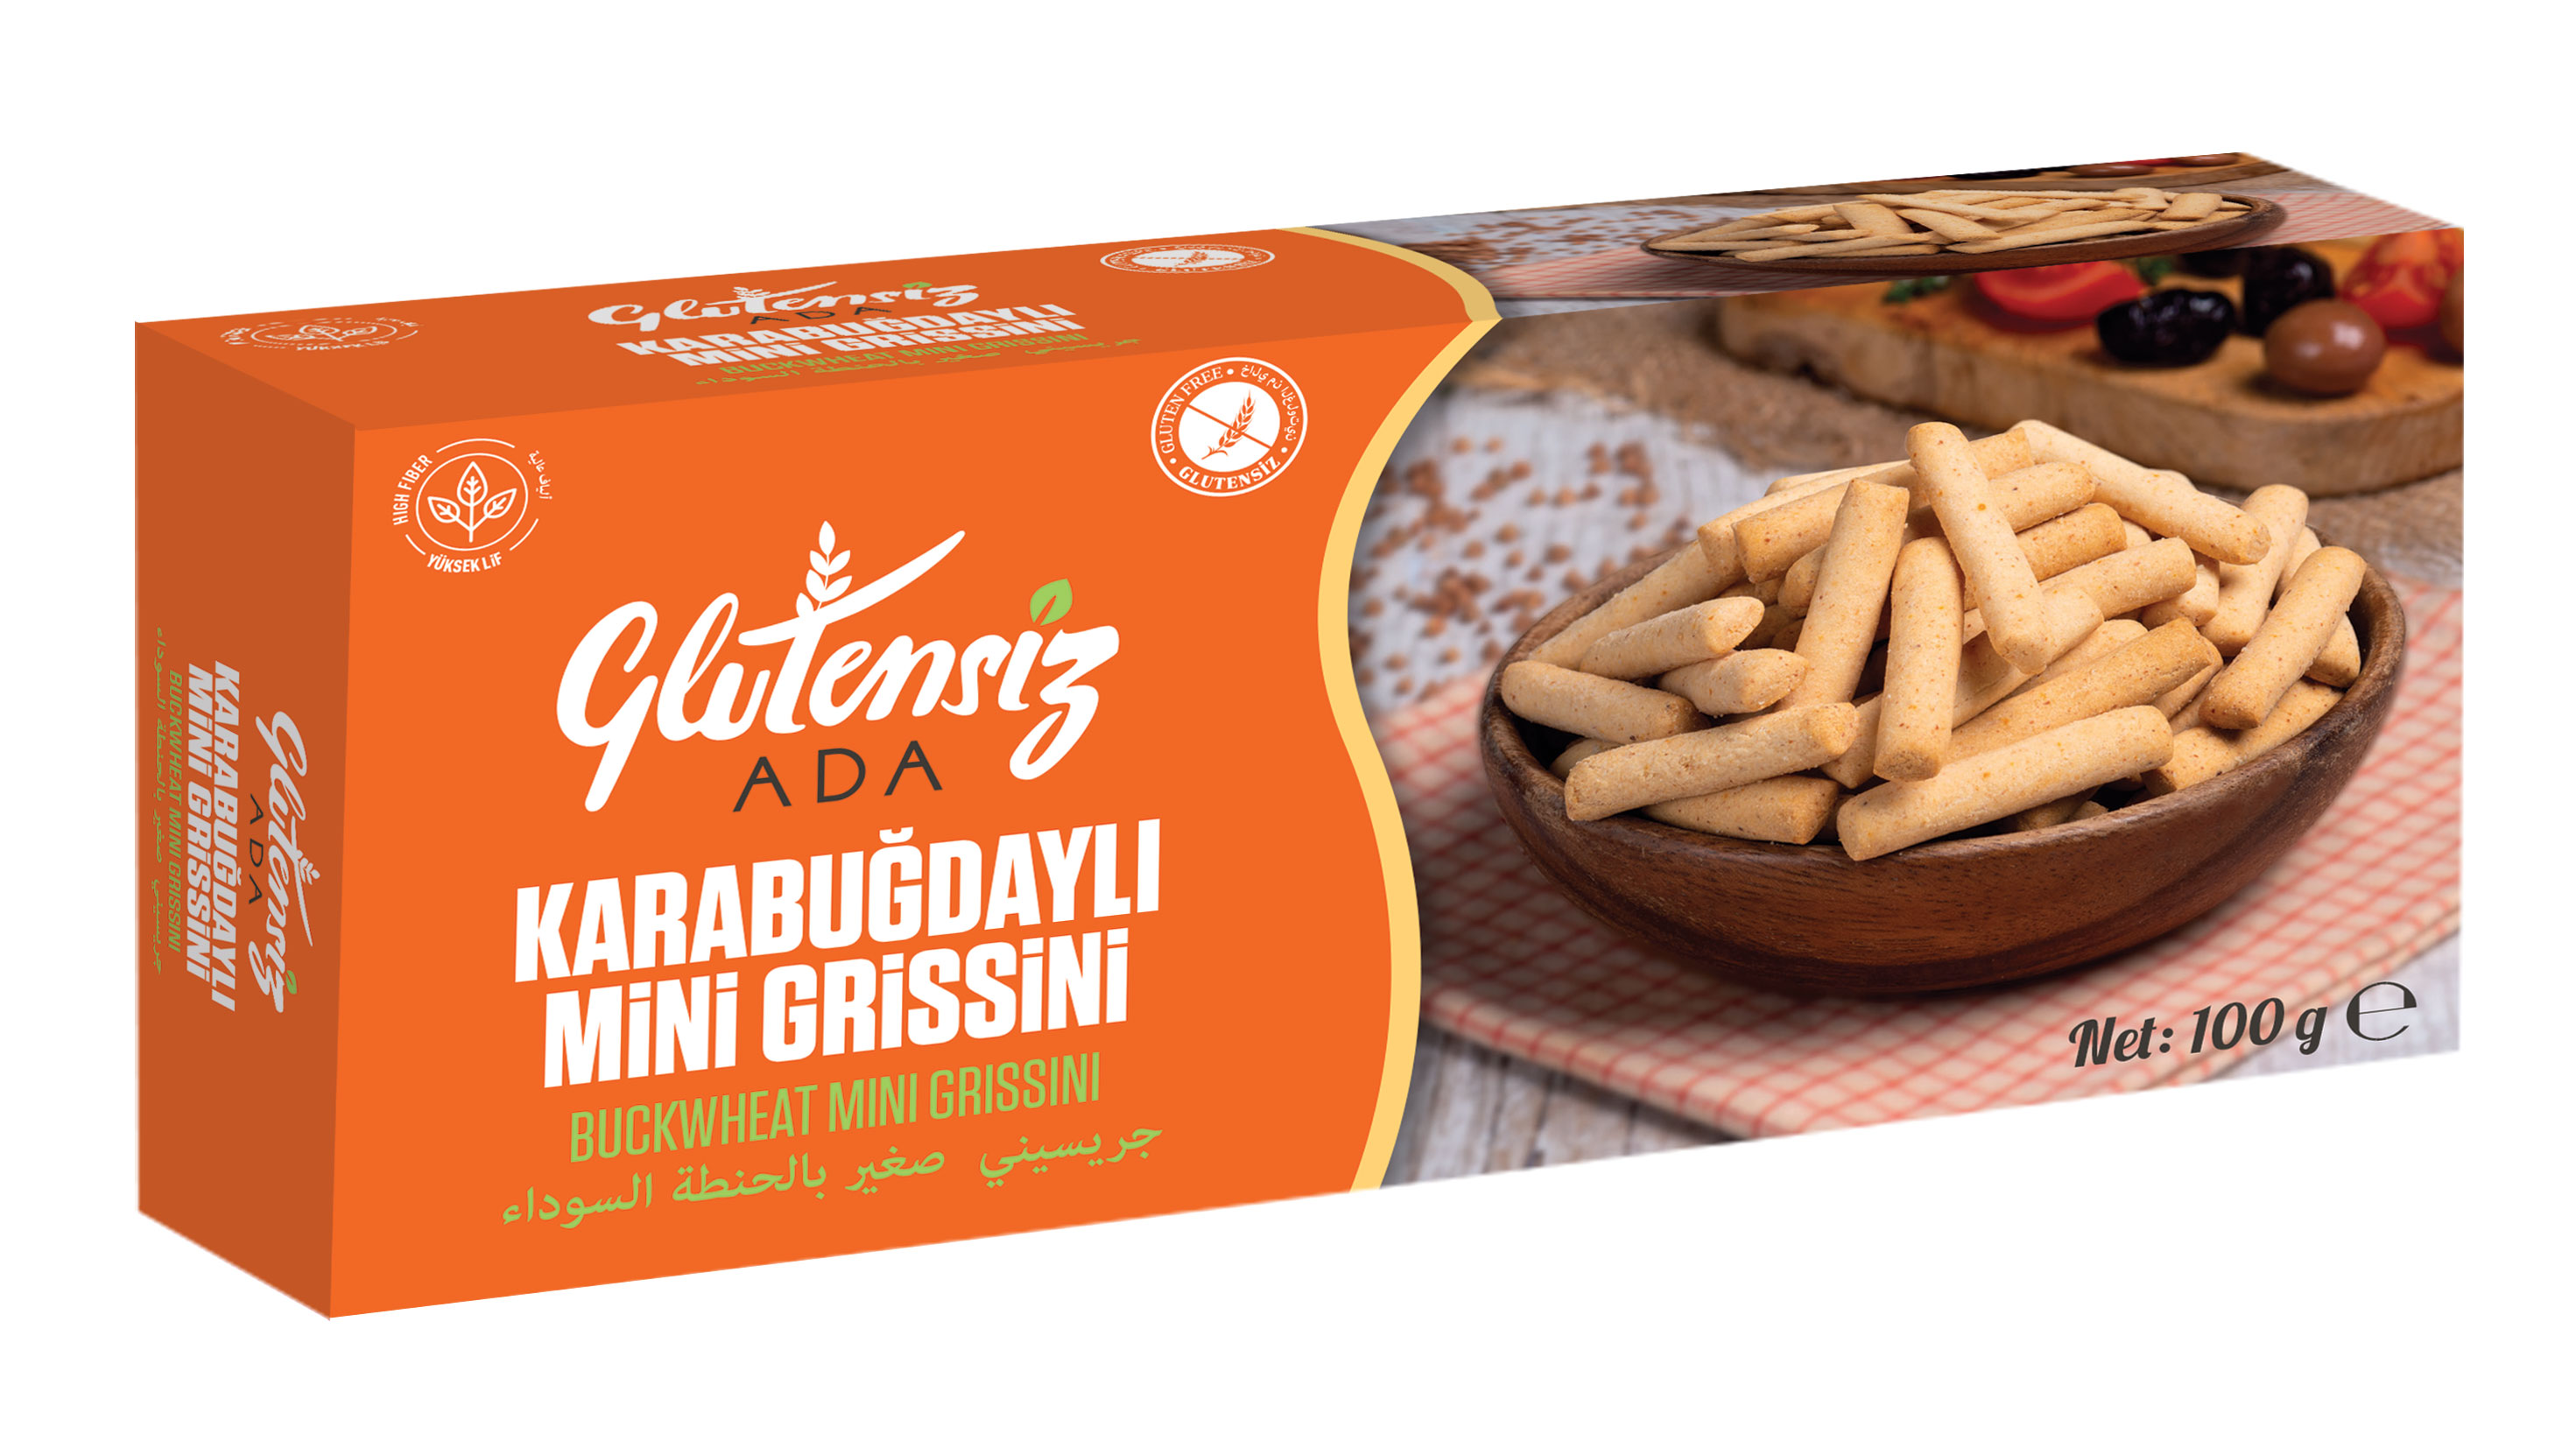 Glutensiz ADA - Karabuğdaylı Mini Grissini